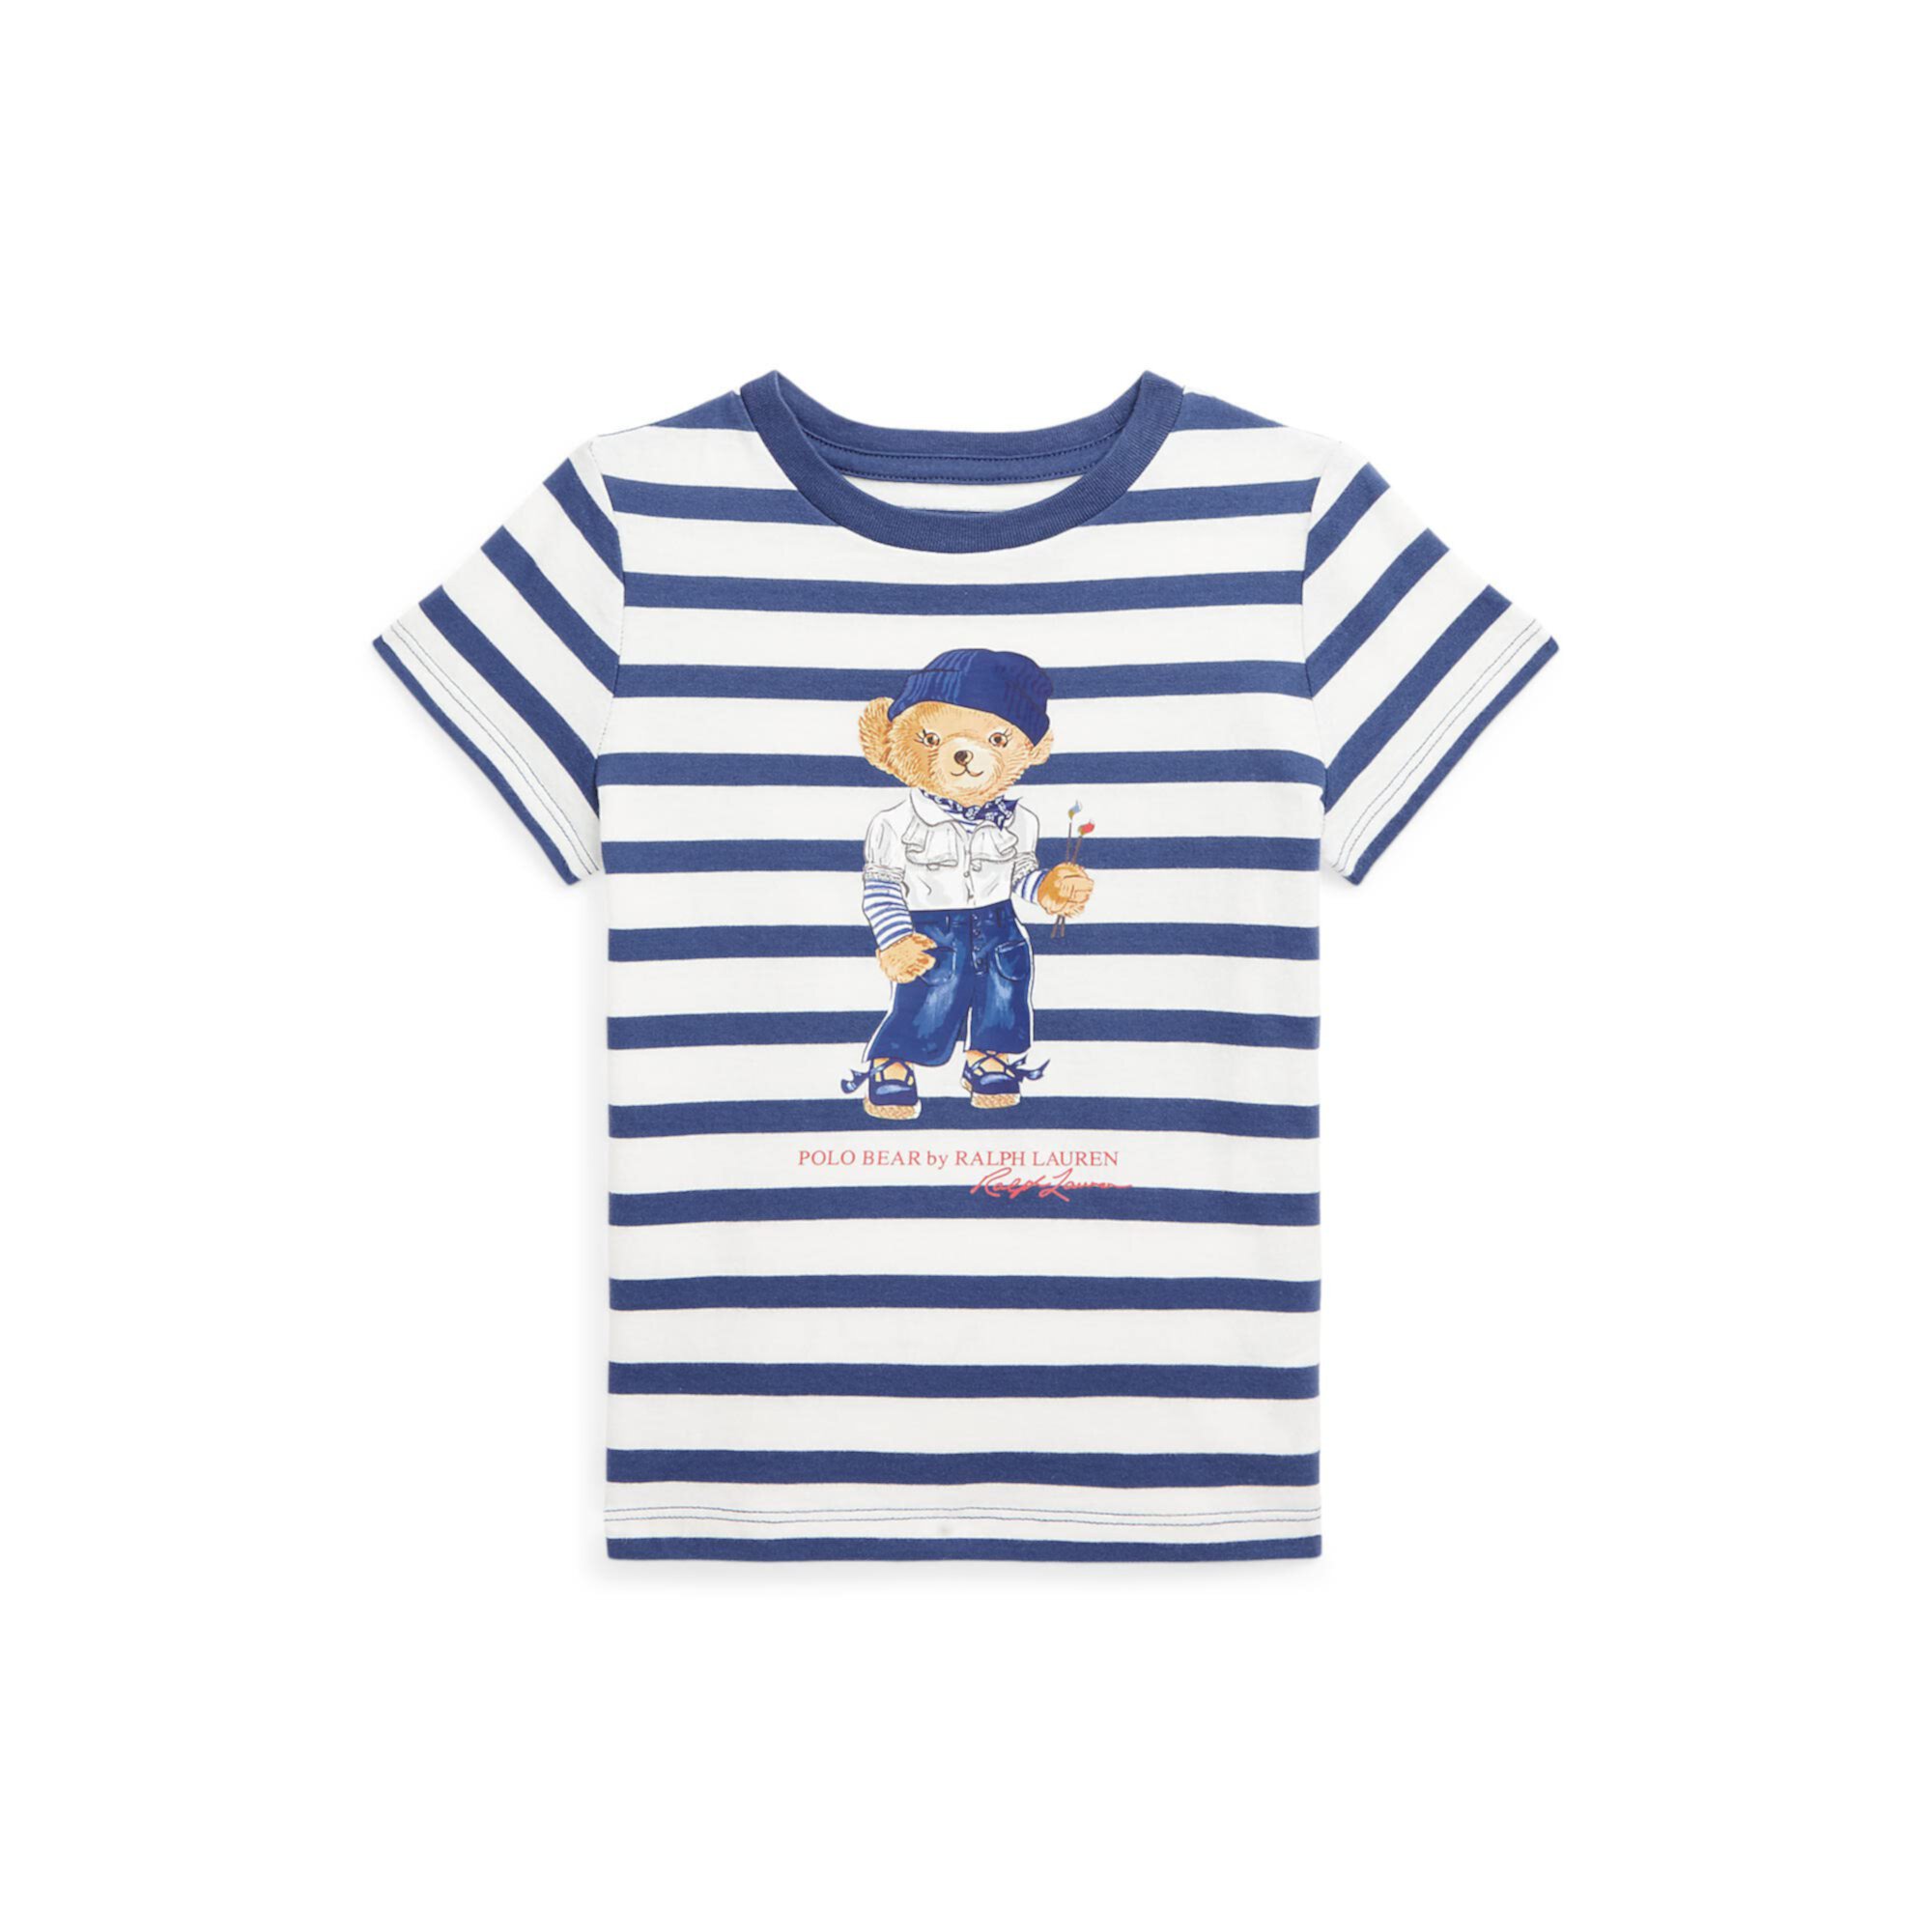 Полосатая хлопковая футболка Polo Bear (для малышей) Polo Ralph Lauren